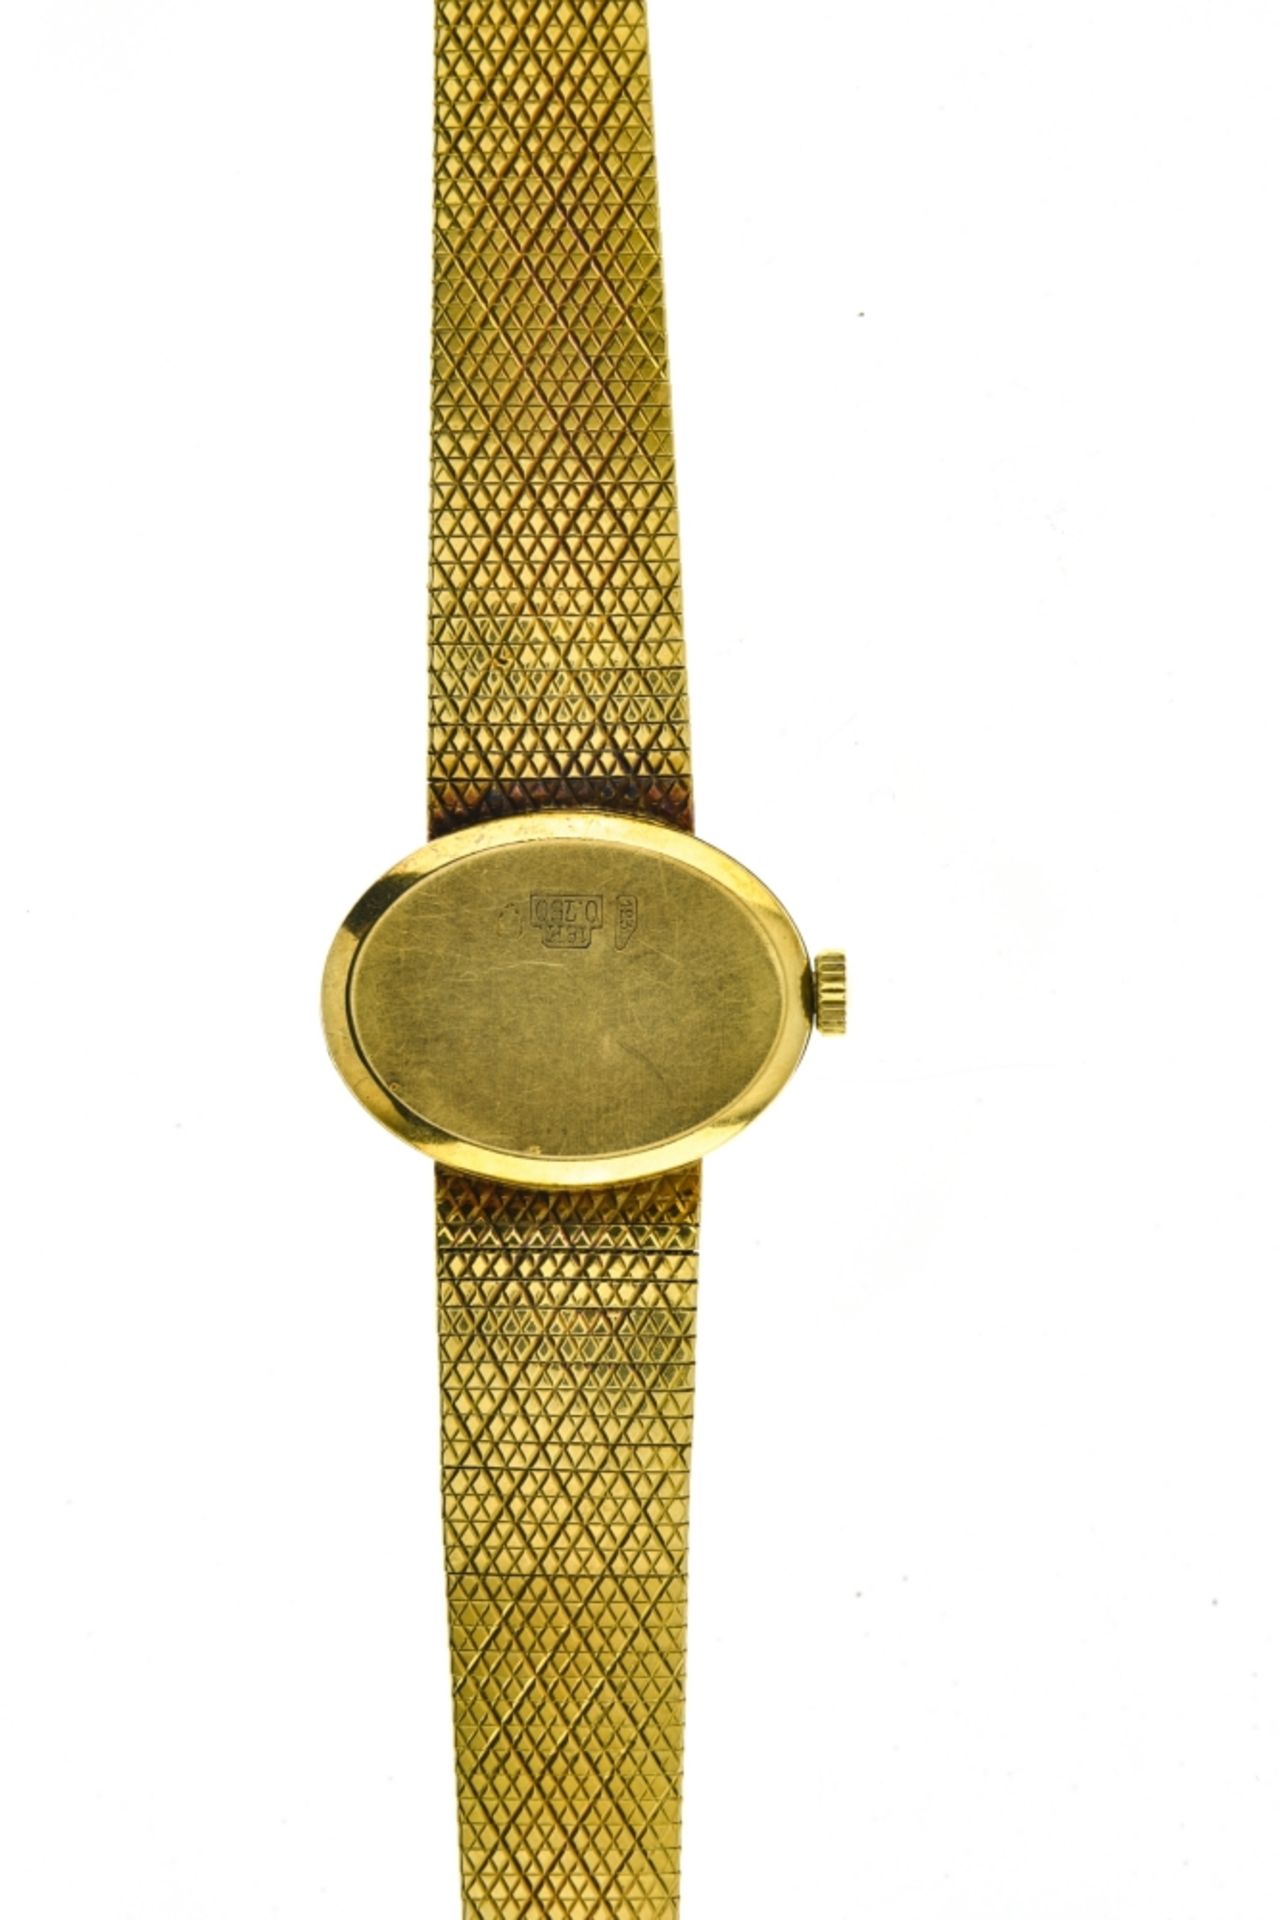 Vintage oval lady's watch SWITZERLAND 18 kt yellow gold bracelet watch Oval casing, horizontally- - Image 2 of 3